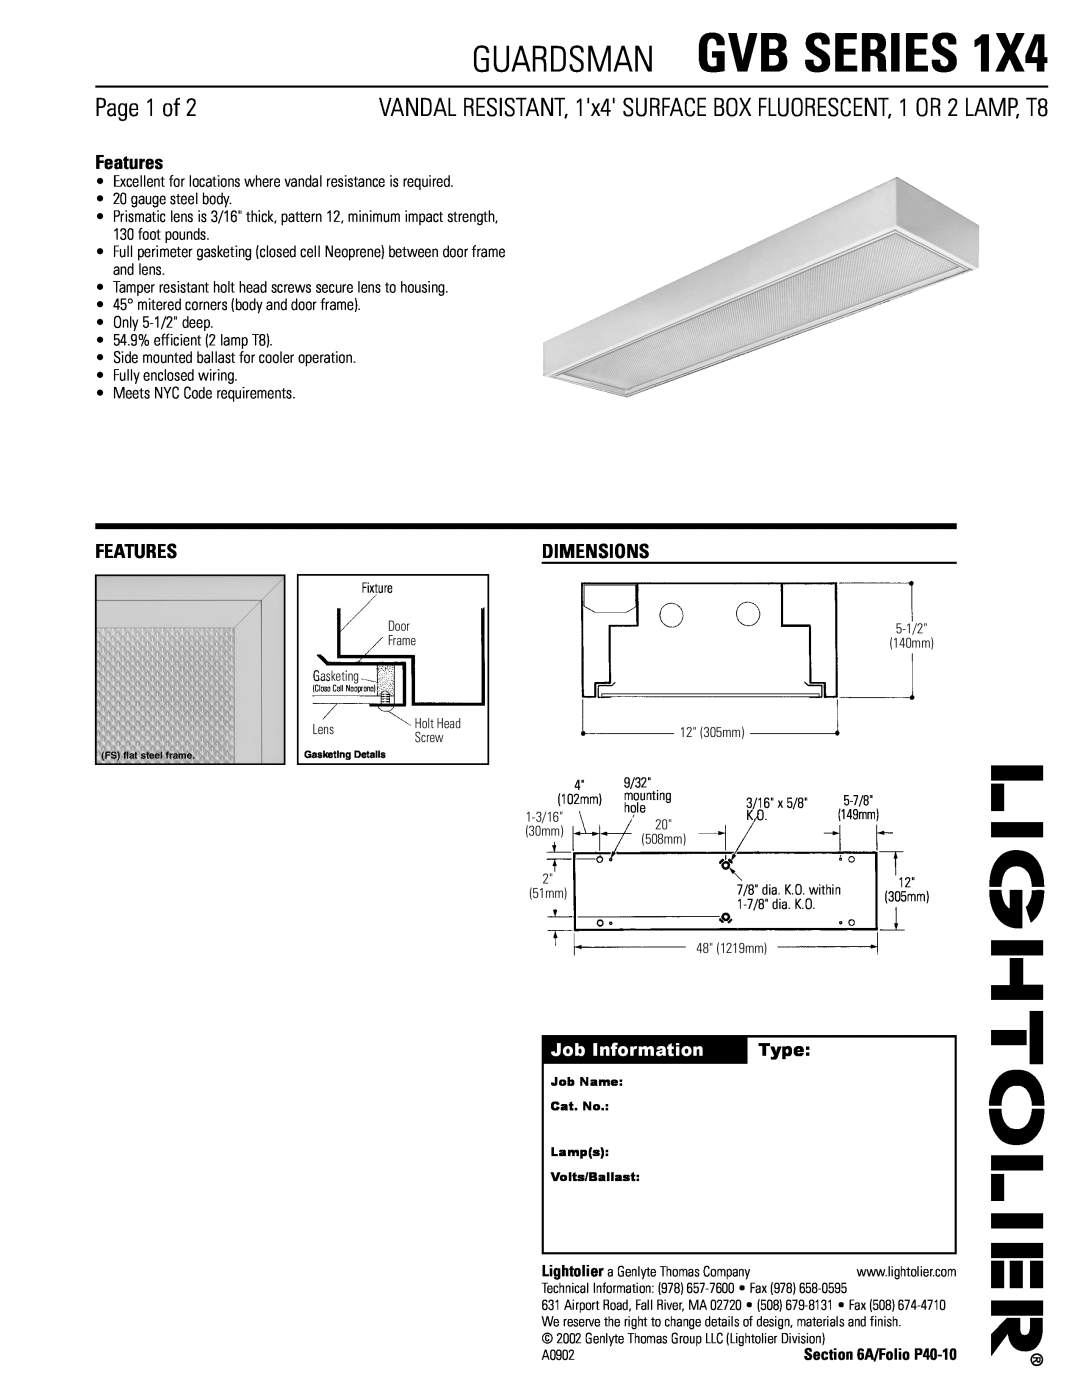 Lightolier GVB SERIES 1X4 dimensions Guardsman Gvb Series, Page 1 of, Features, Dimensions, Job Information, Type 